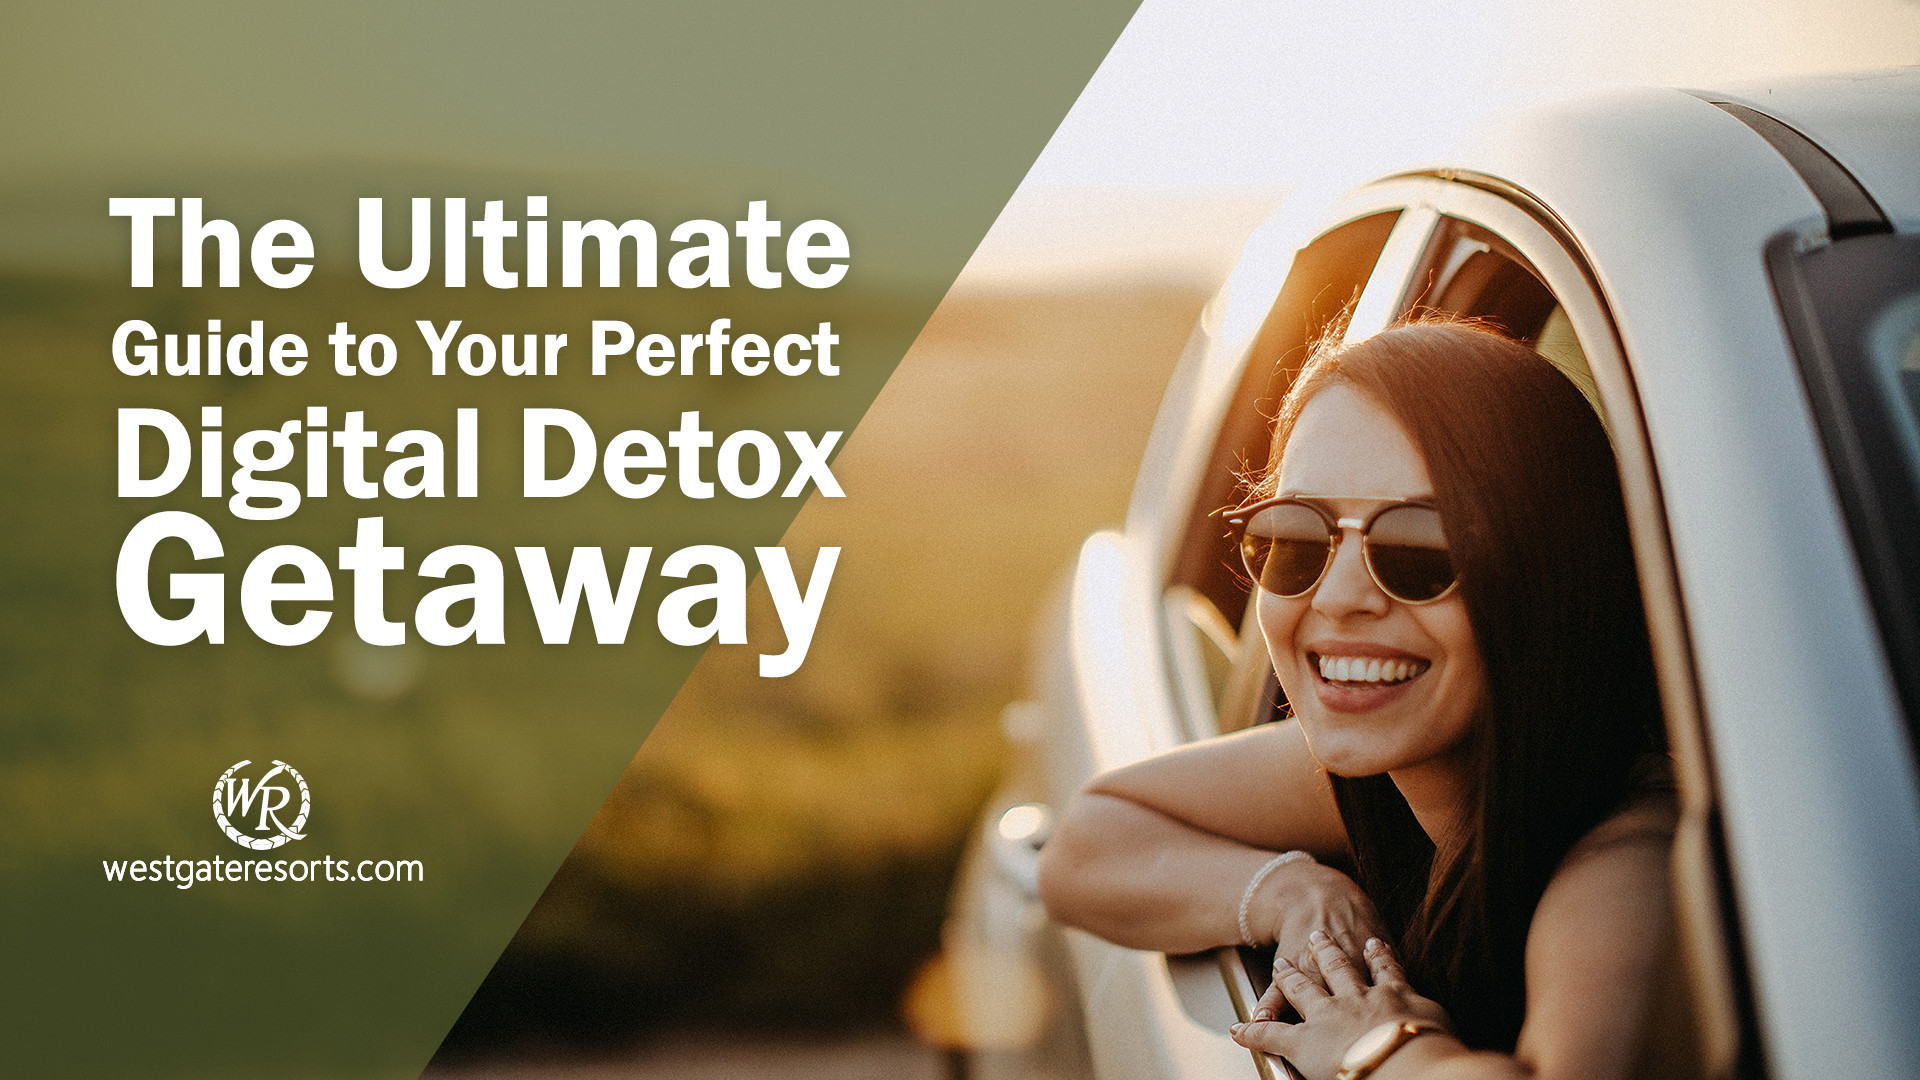 The Ultimate Guide To Your Perfect Digital Detox Getaway | Digital Detox Vacations & Retreats